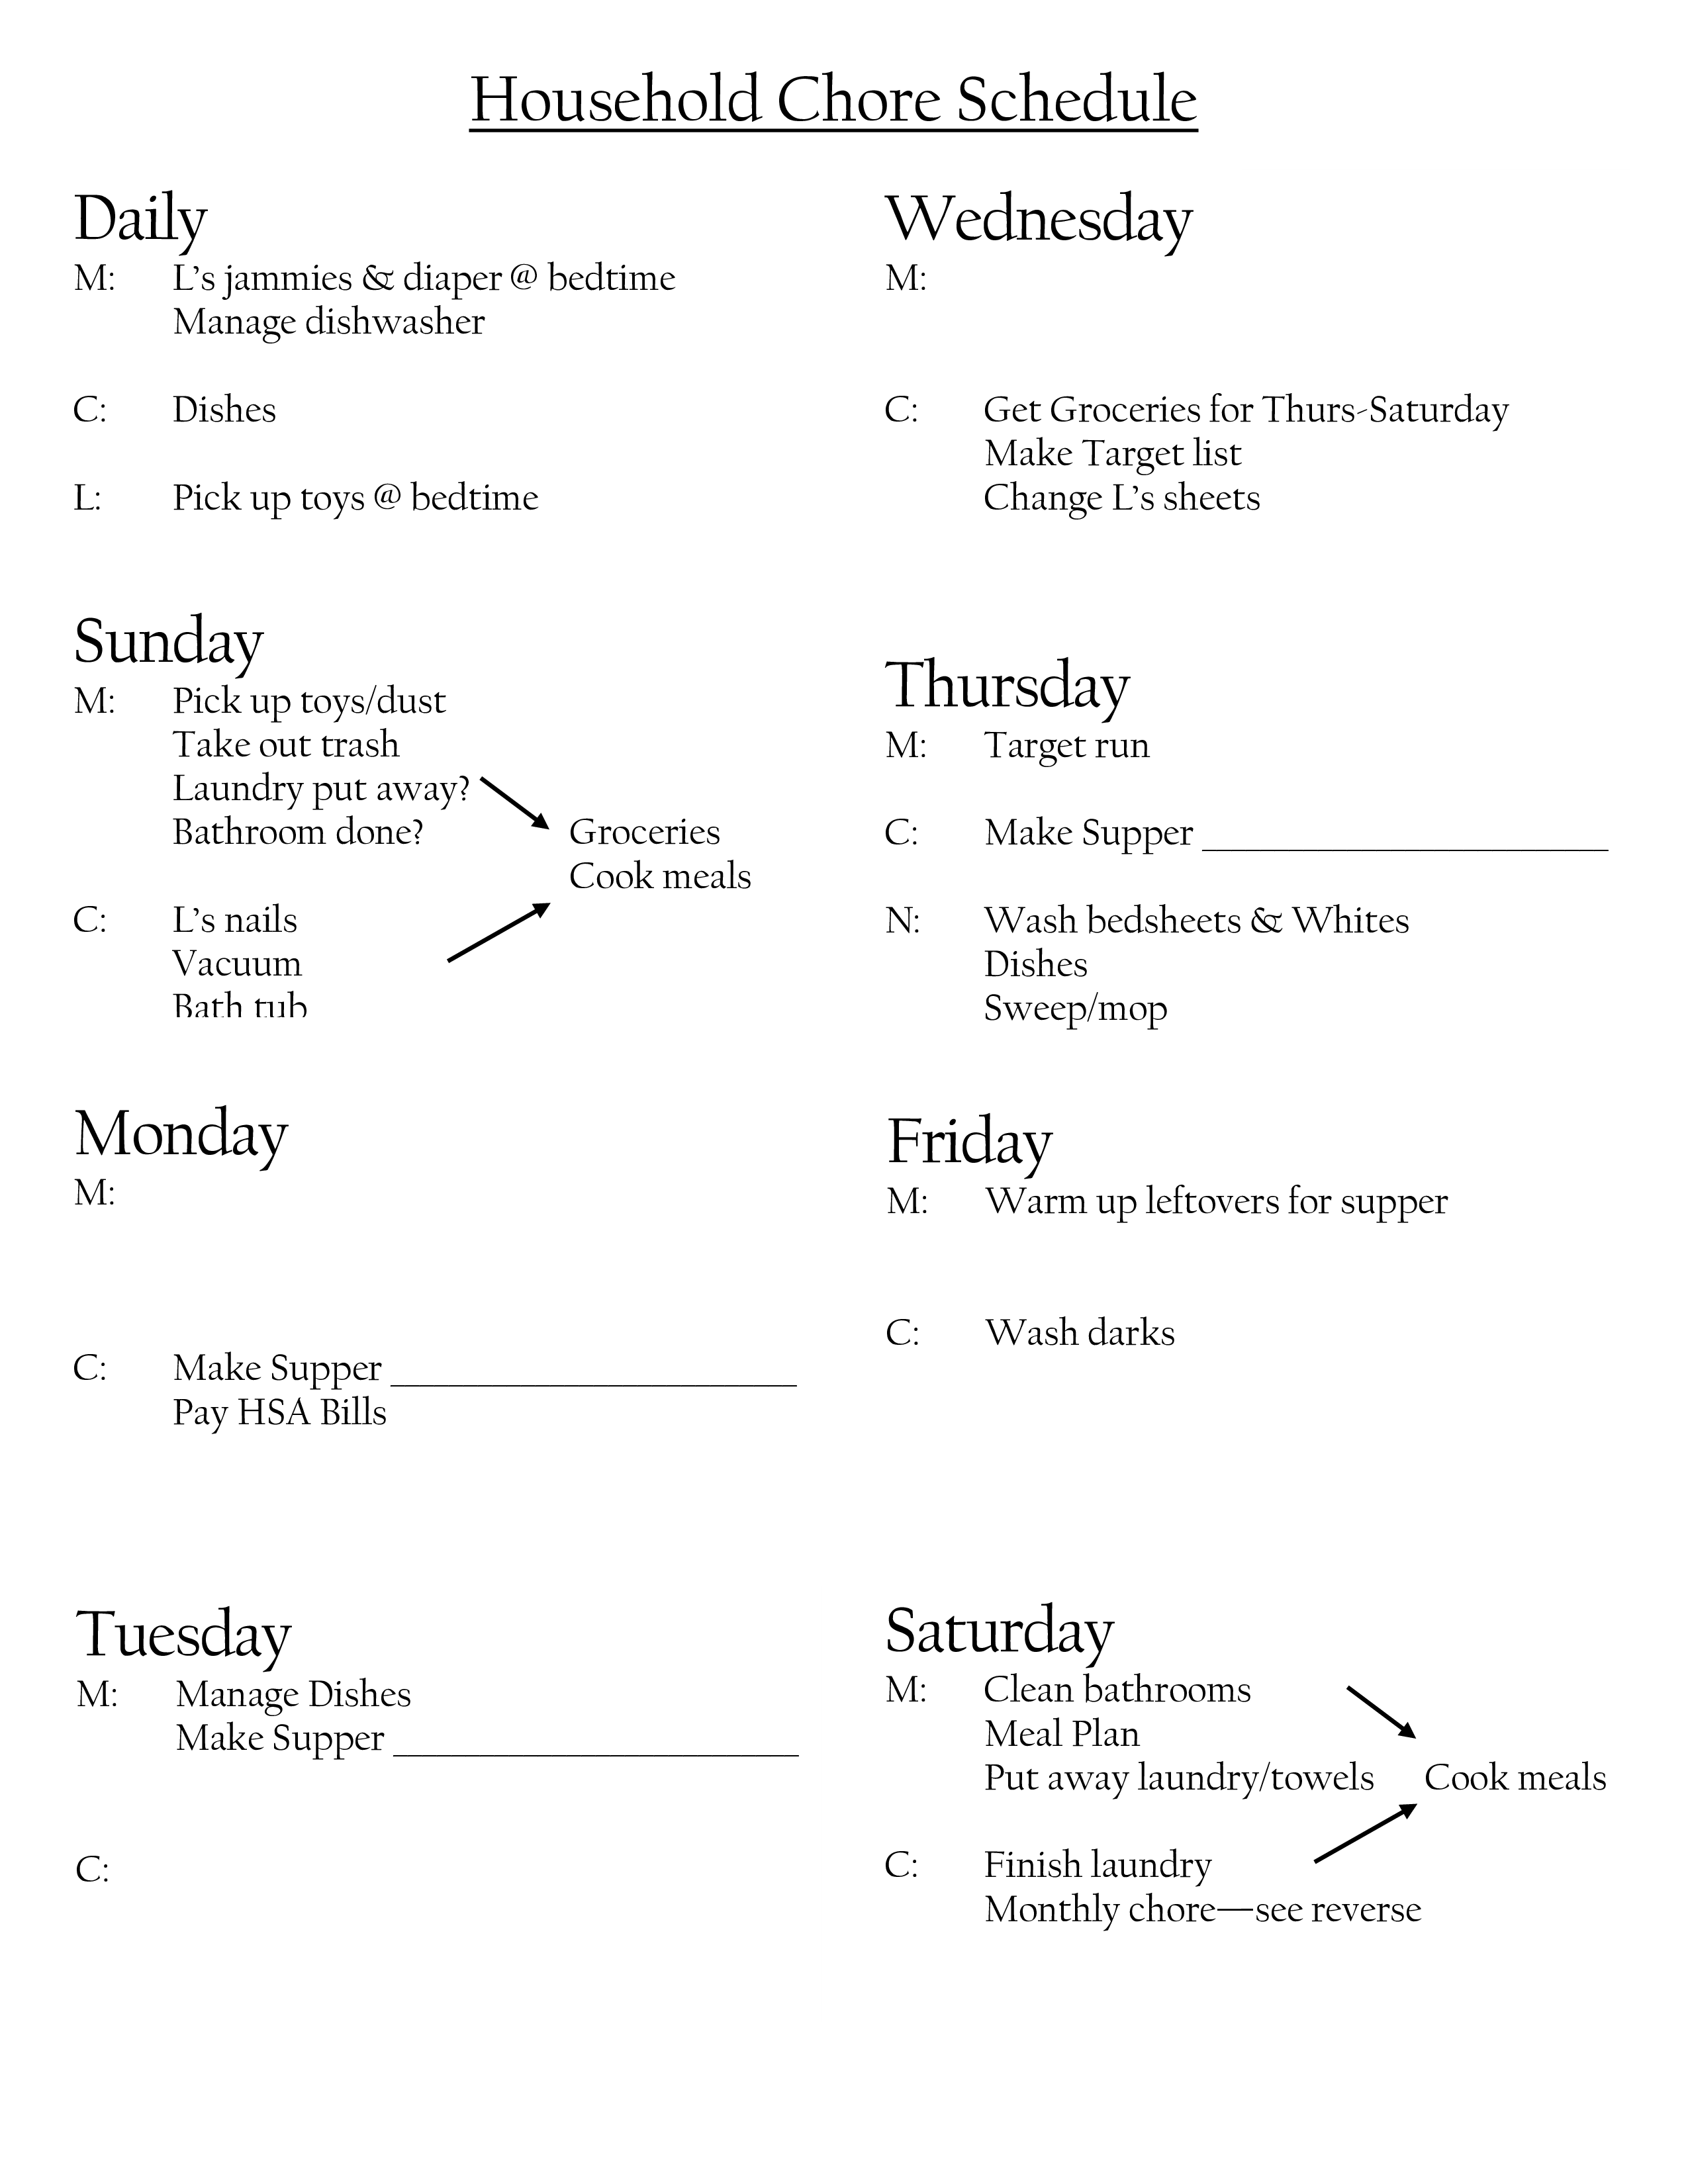 household chore schedule plantilla imagen principal